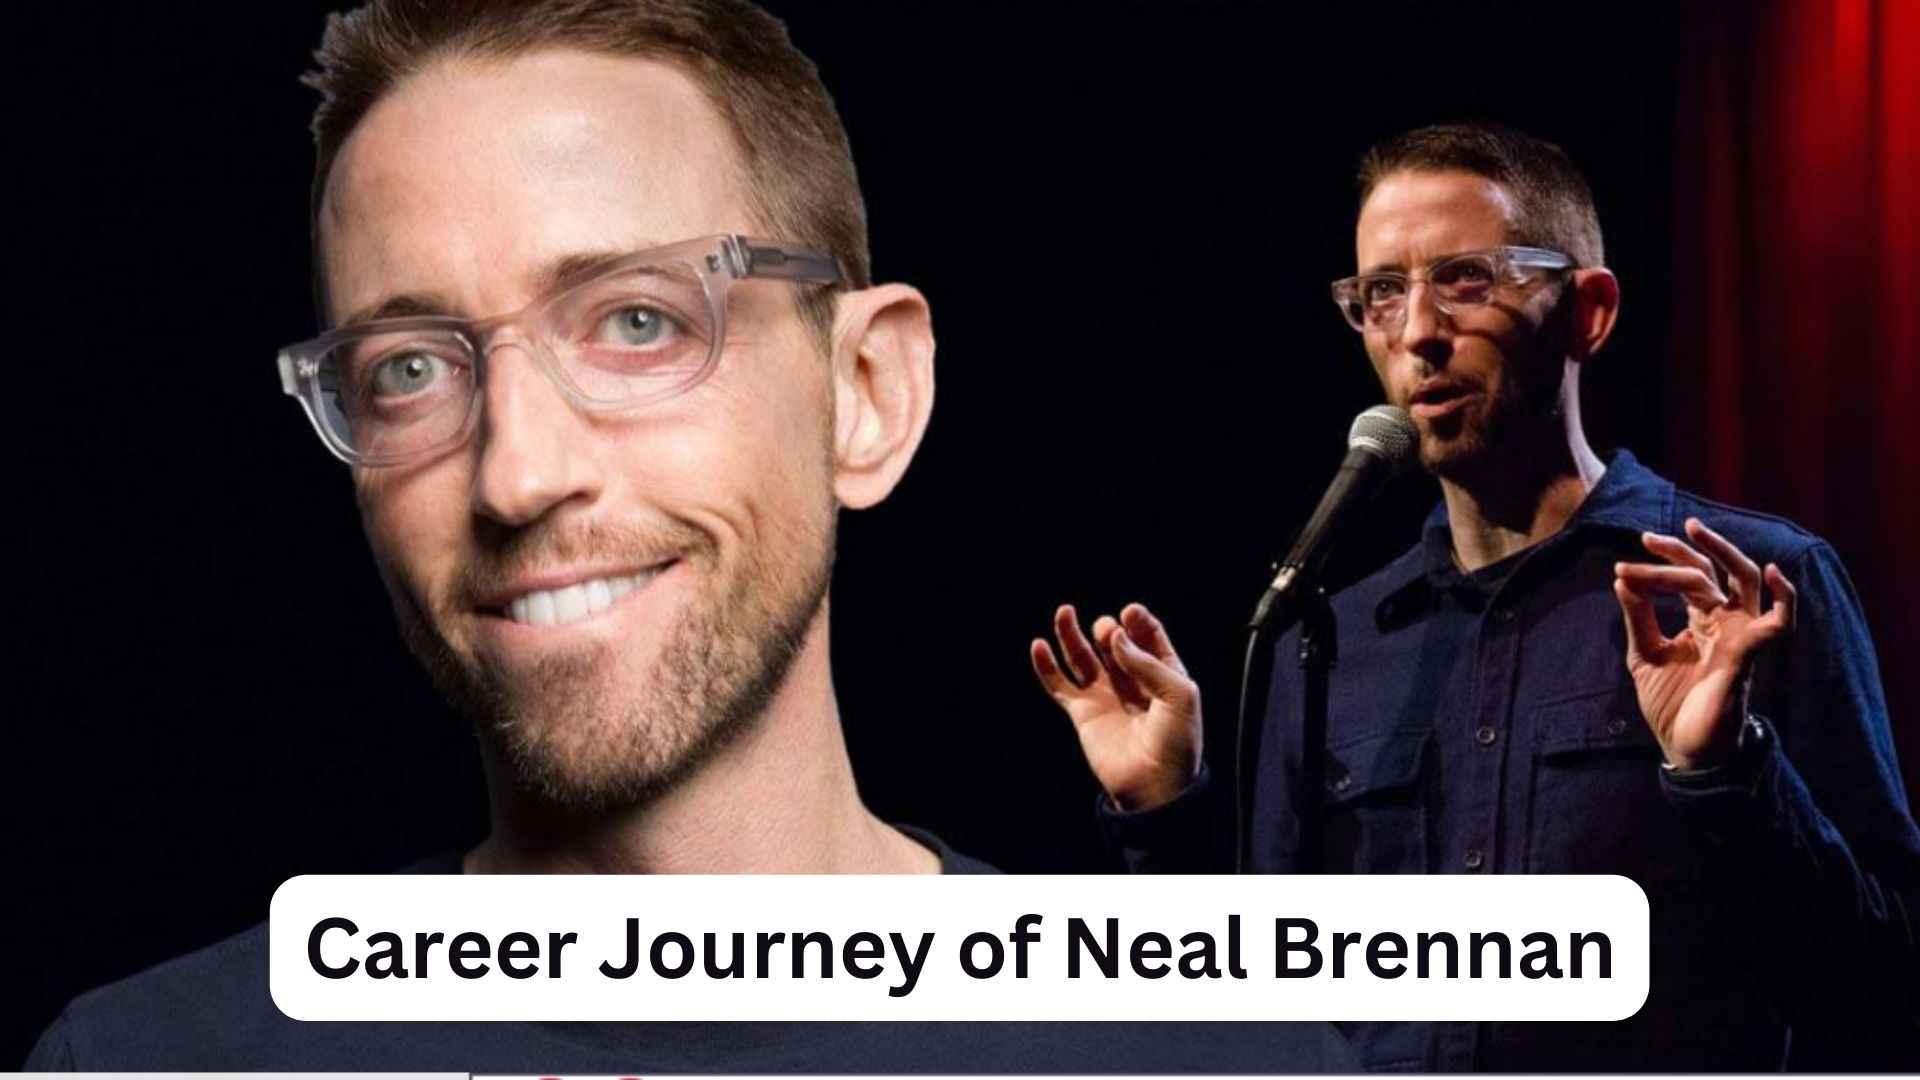 Career Journey of Neal Brennan